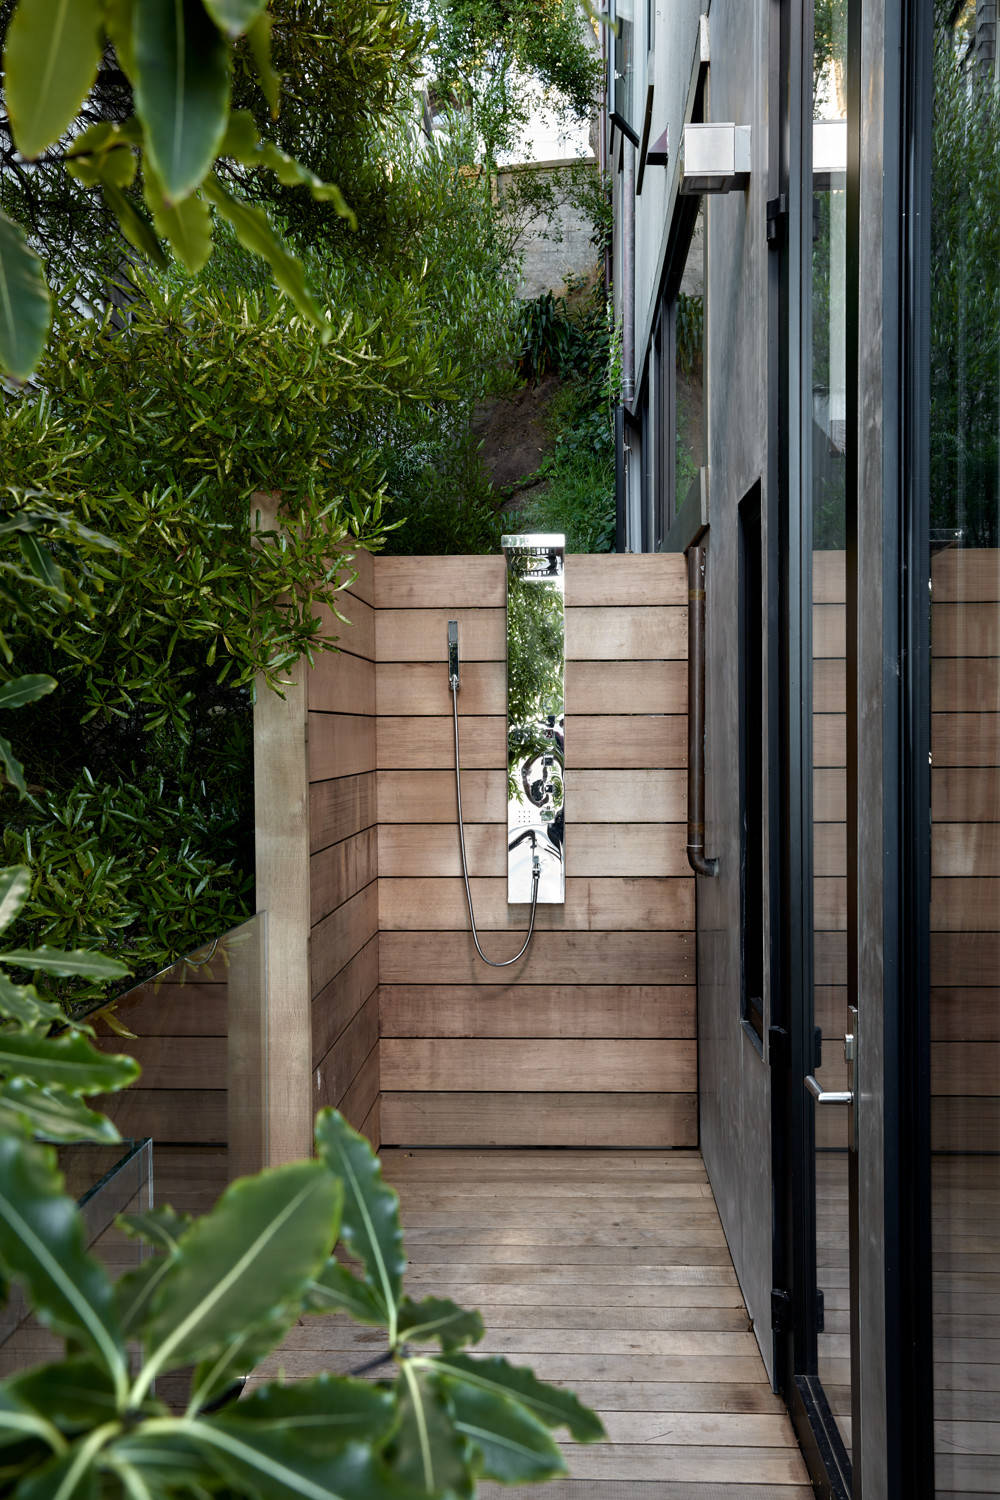 75 Beautiful Modern Outdoor Shower Design Houzz Pictures Ideas May 2021 Houzz